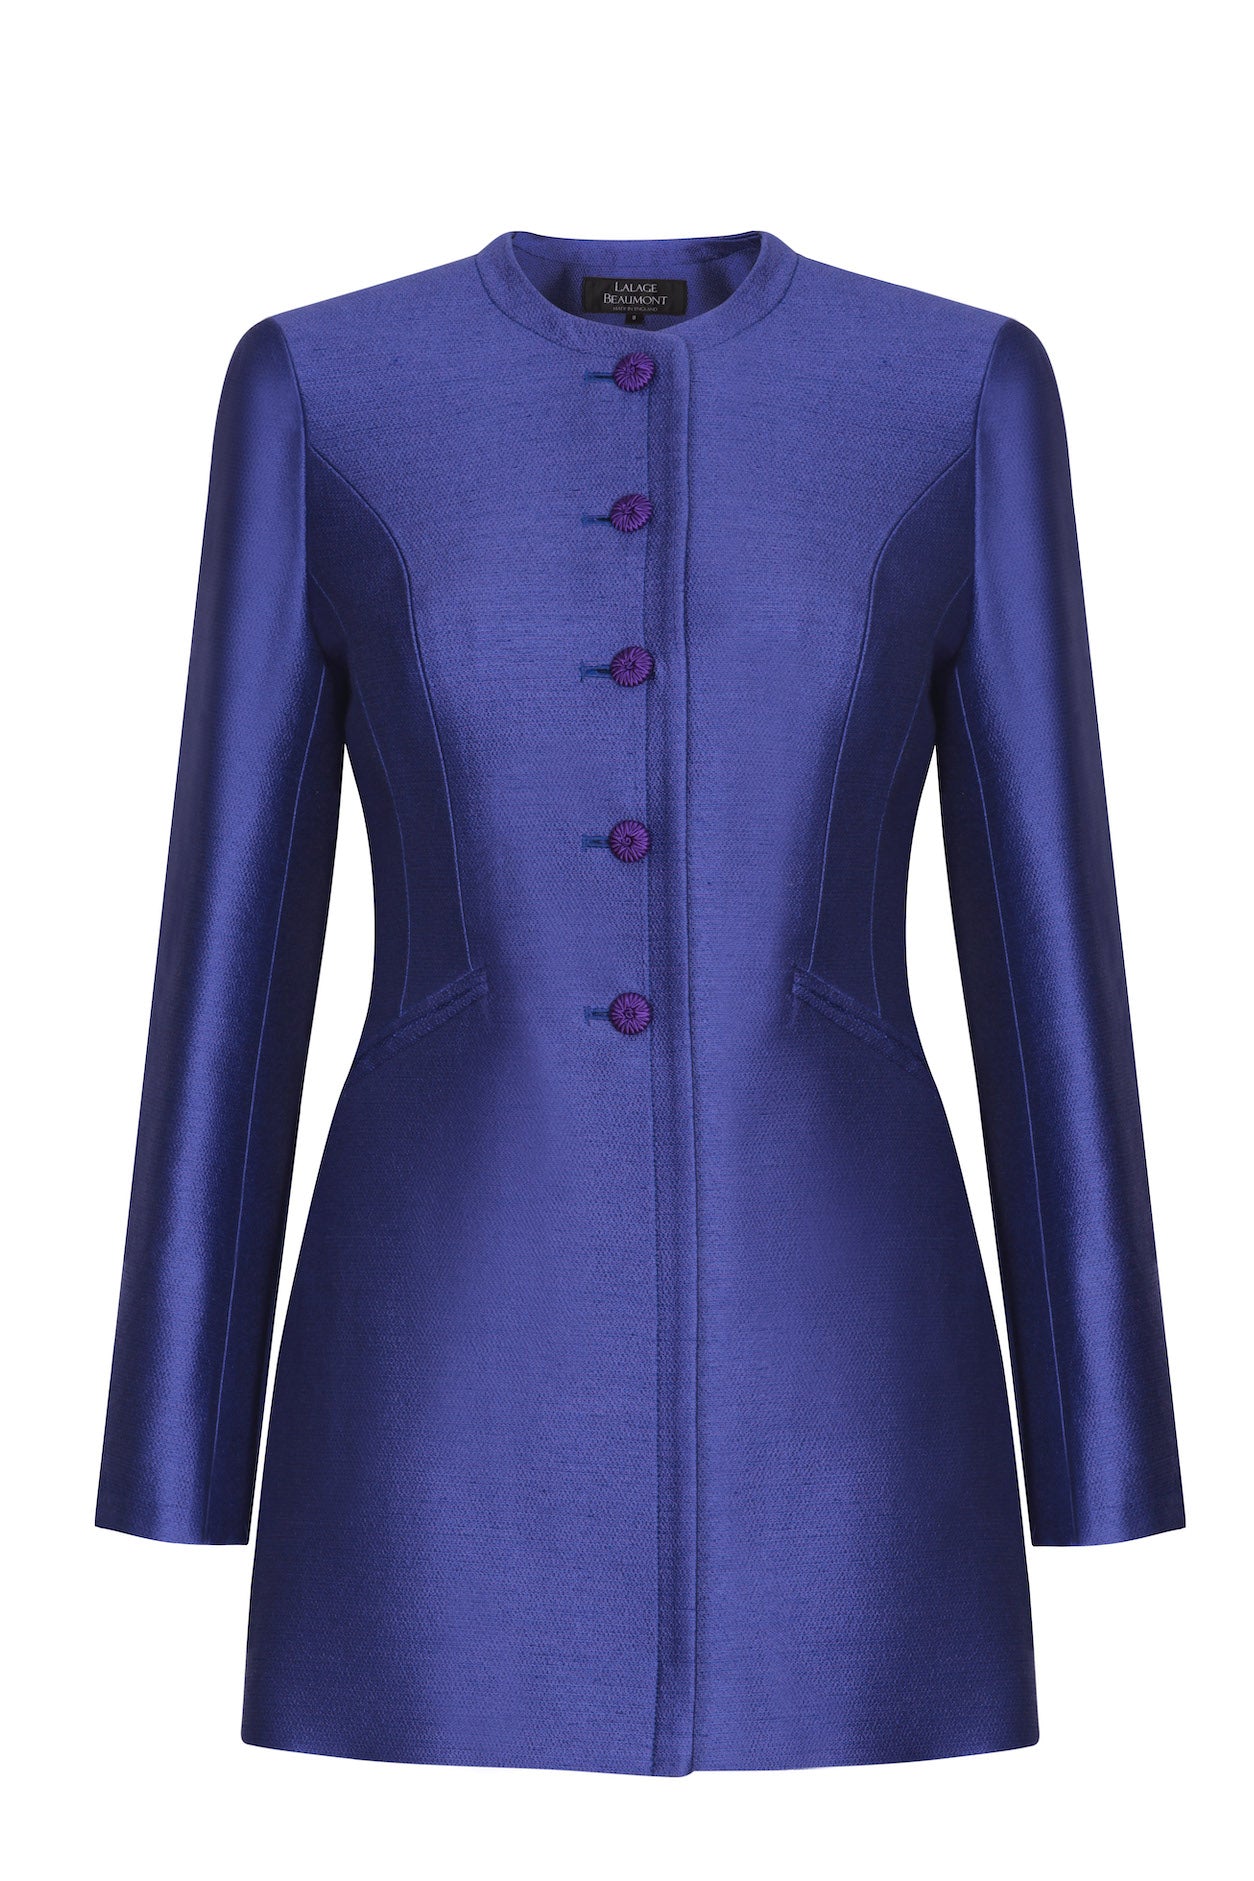 Long Jacket in Purple/Royal Plain Brocade - Serena